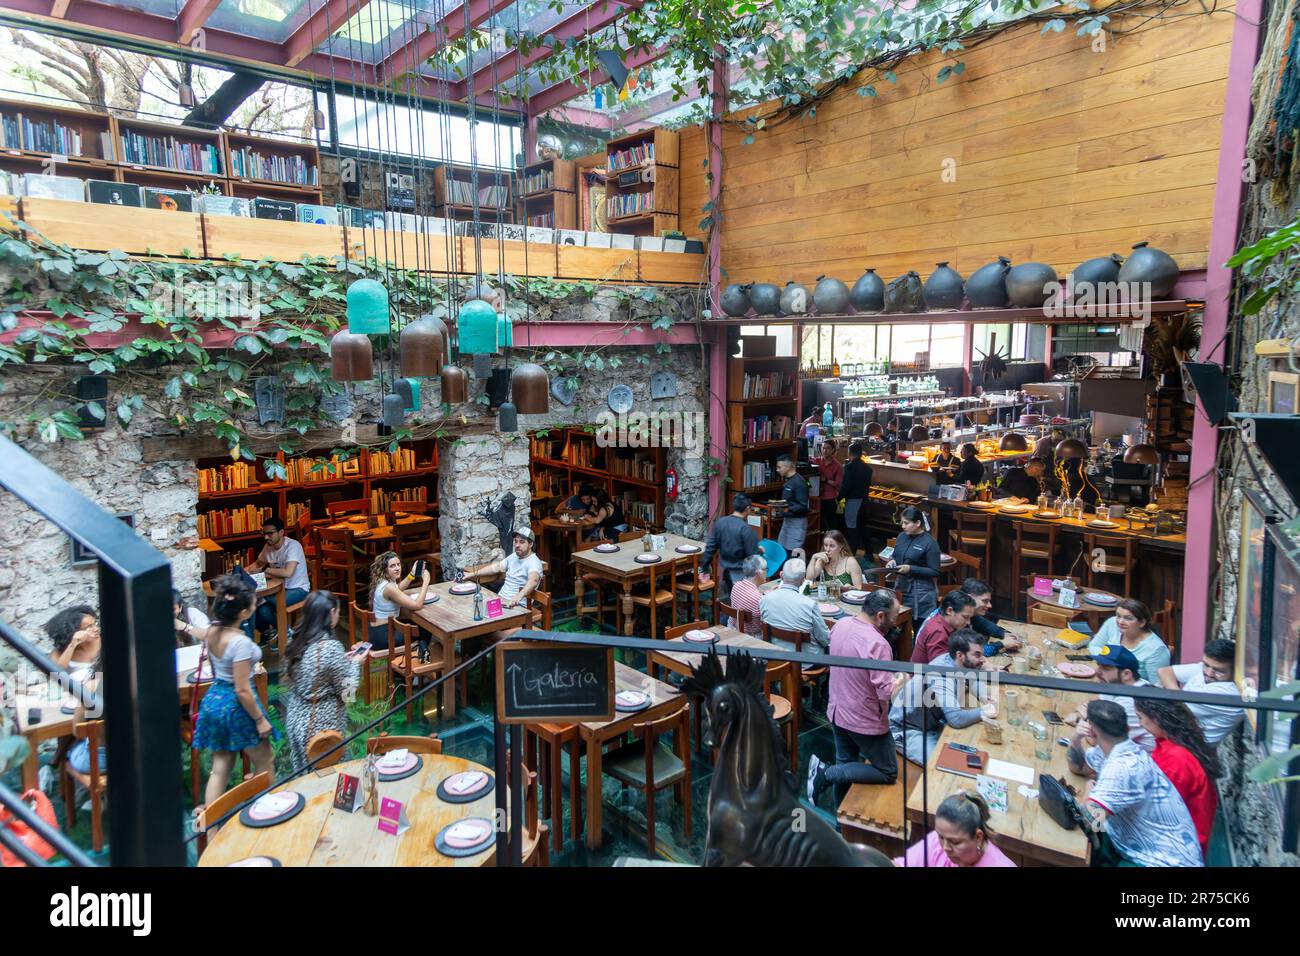 People at lunchtime inside Tetetlan Galeria restaurant, Jardines del ...